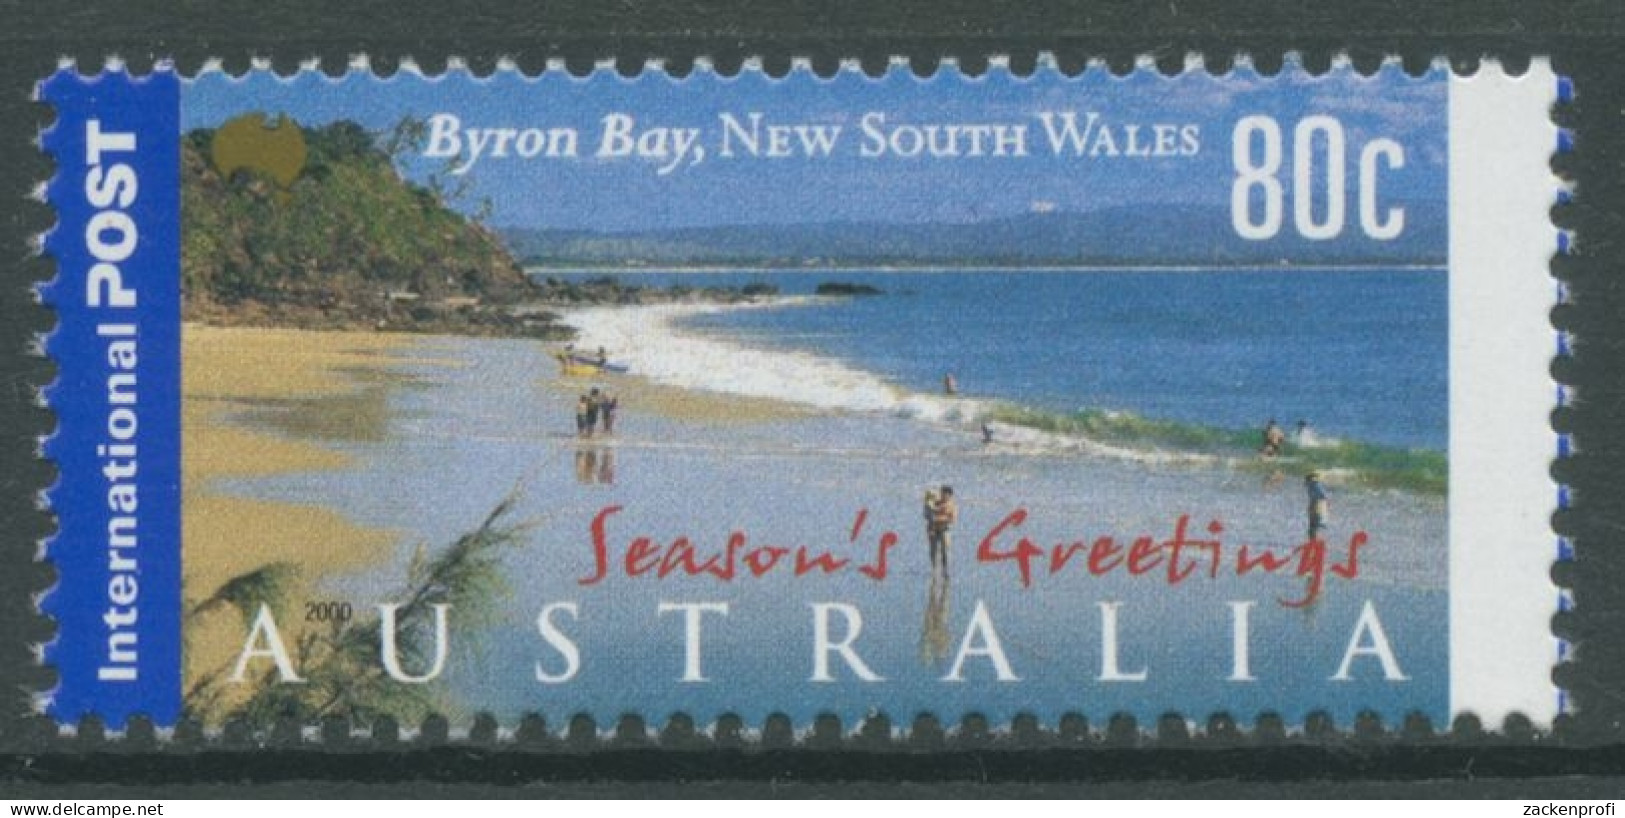 Australien 2000 Weihnachtsgrüße Sandstrand Byron Bay 2004 Postfrisch - Ongebruikt